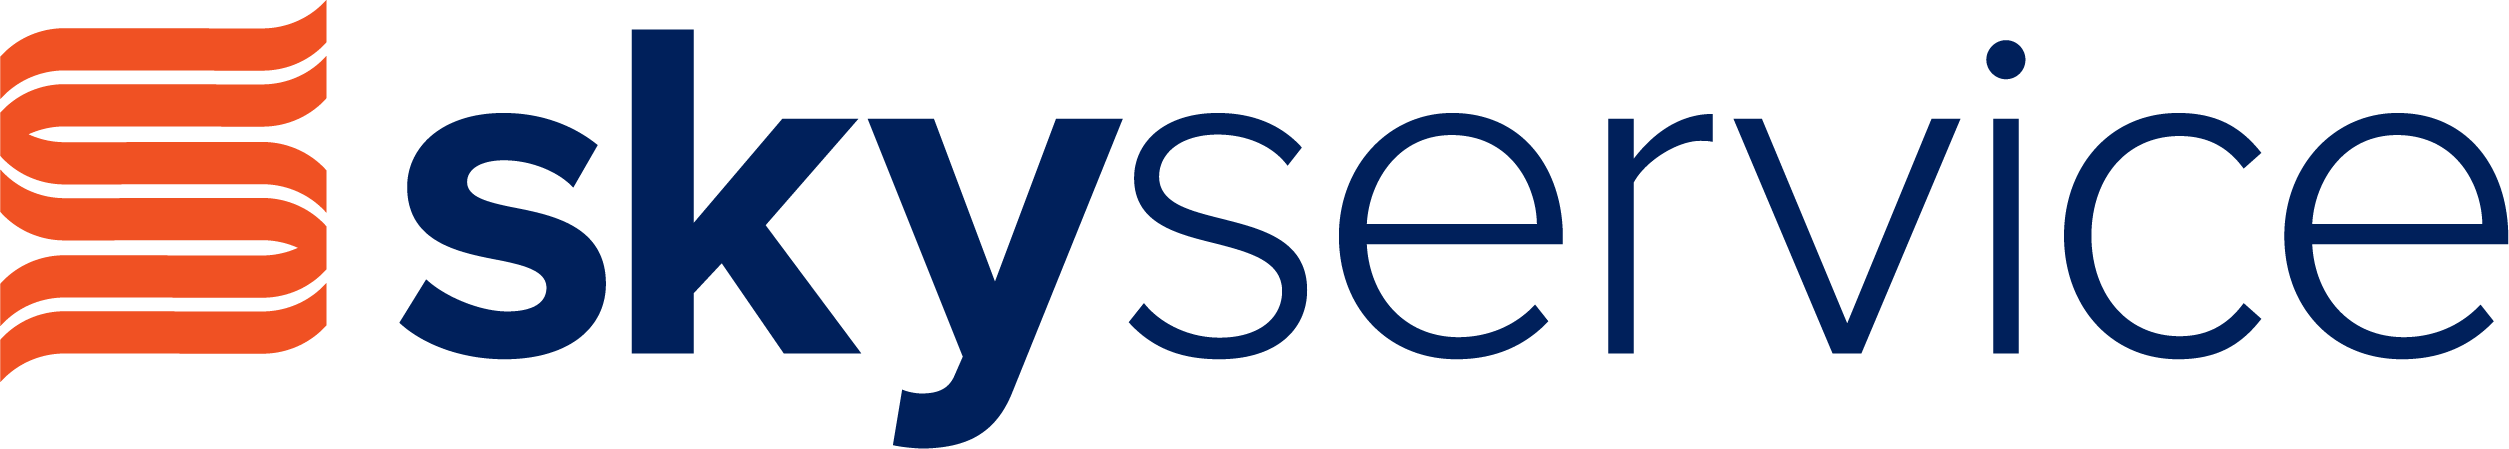 Skyservice Business Aviation, Inc. logo